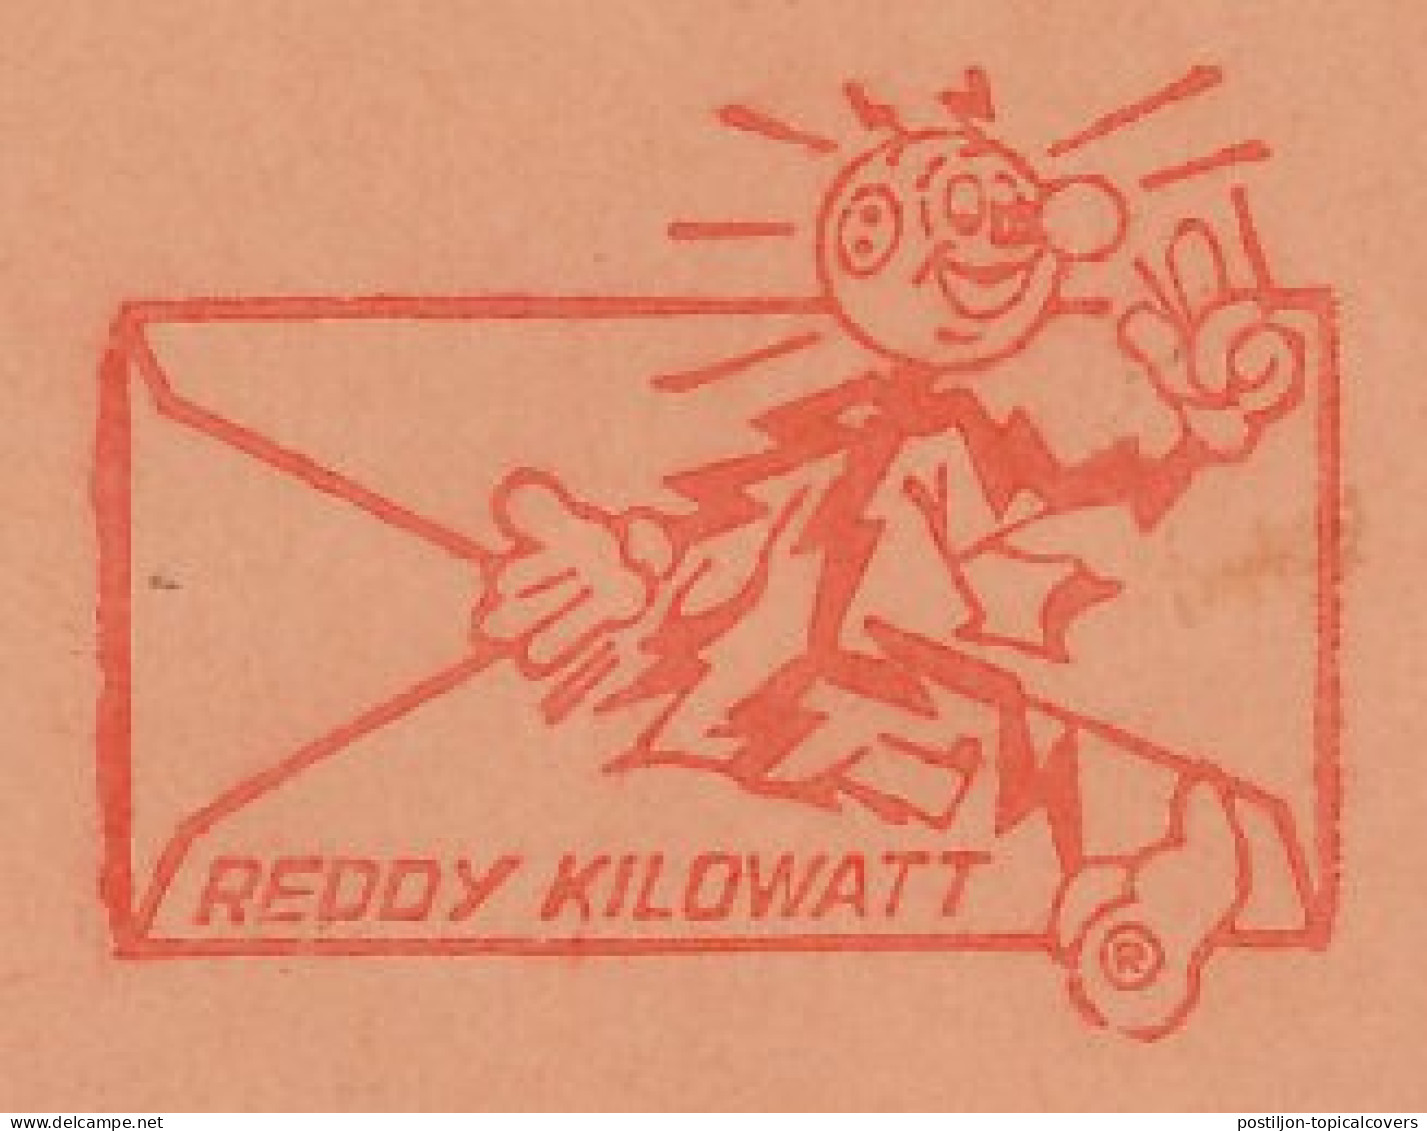 Meter Cut Belgium 1986 Reddy Kilowatt - Electricity